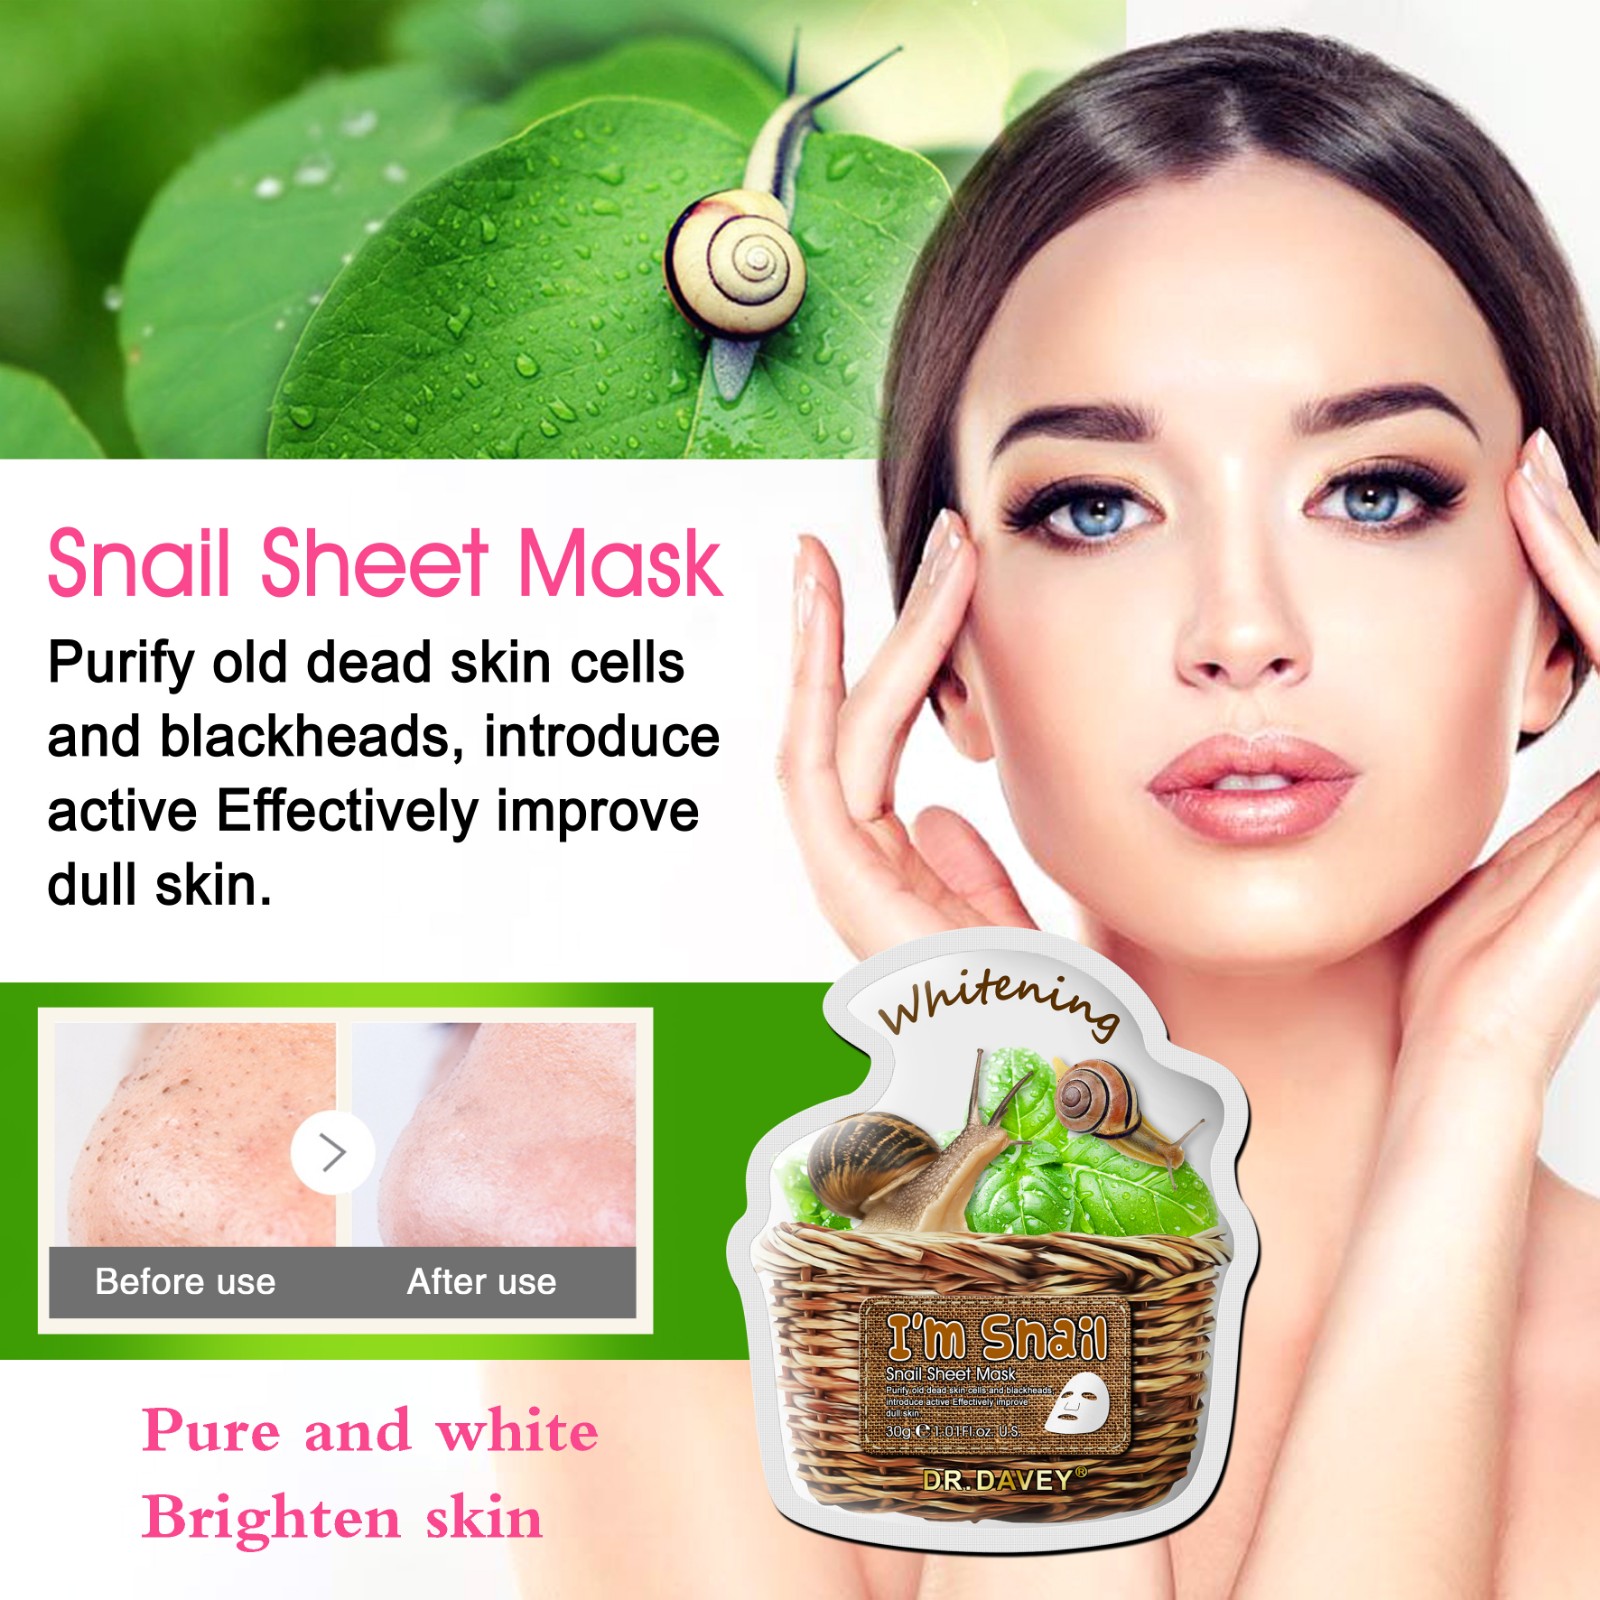 Snail mask sheet